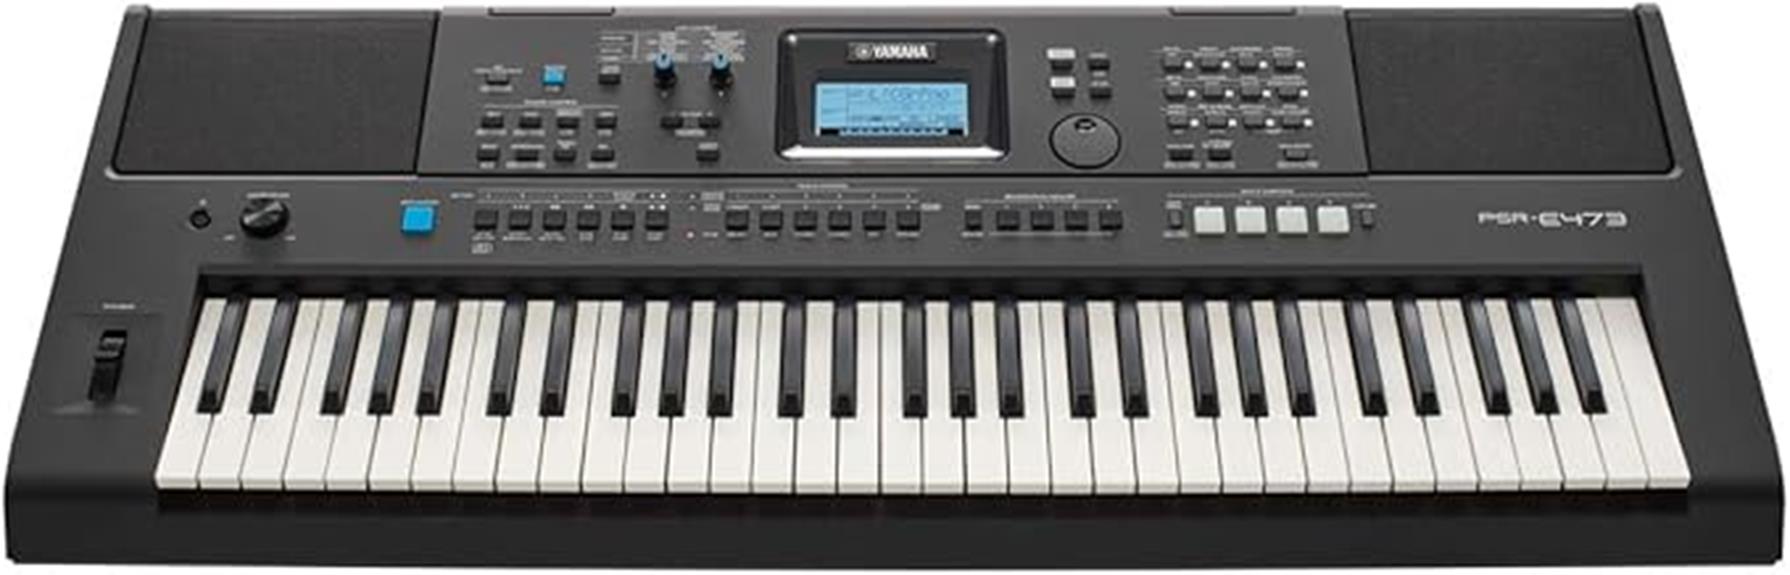 portable yamaha keyboard psre473